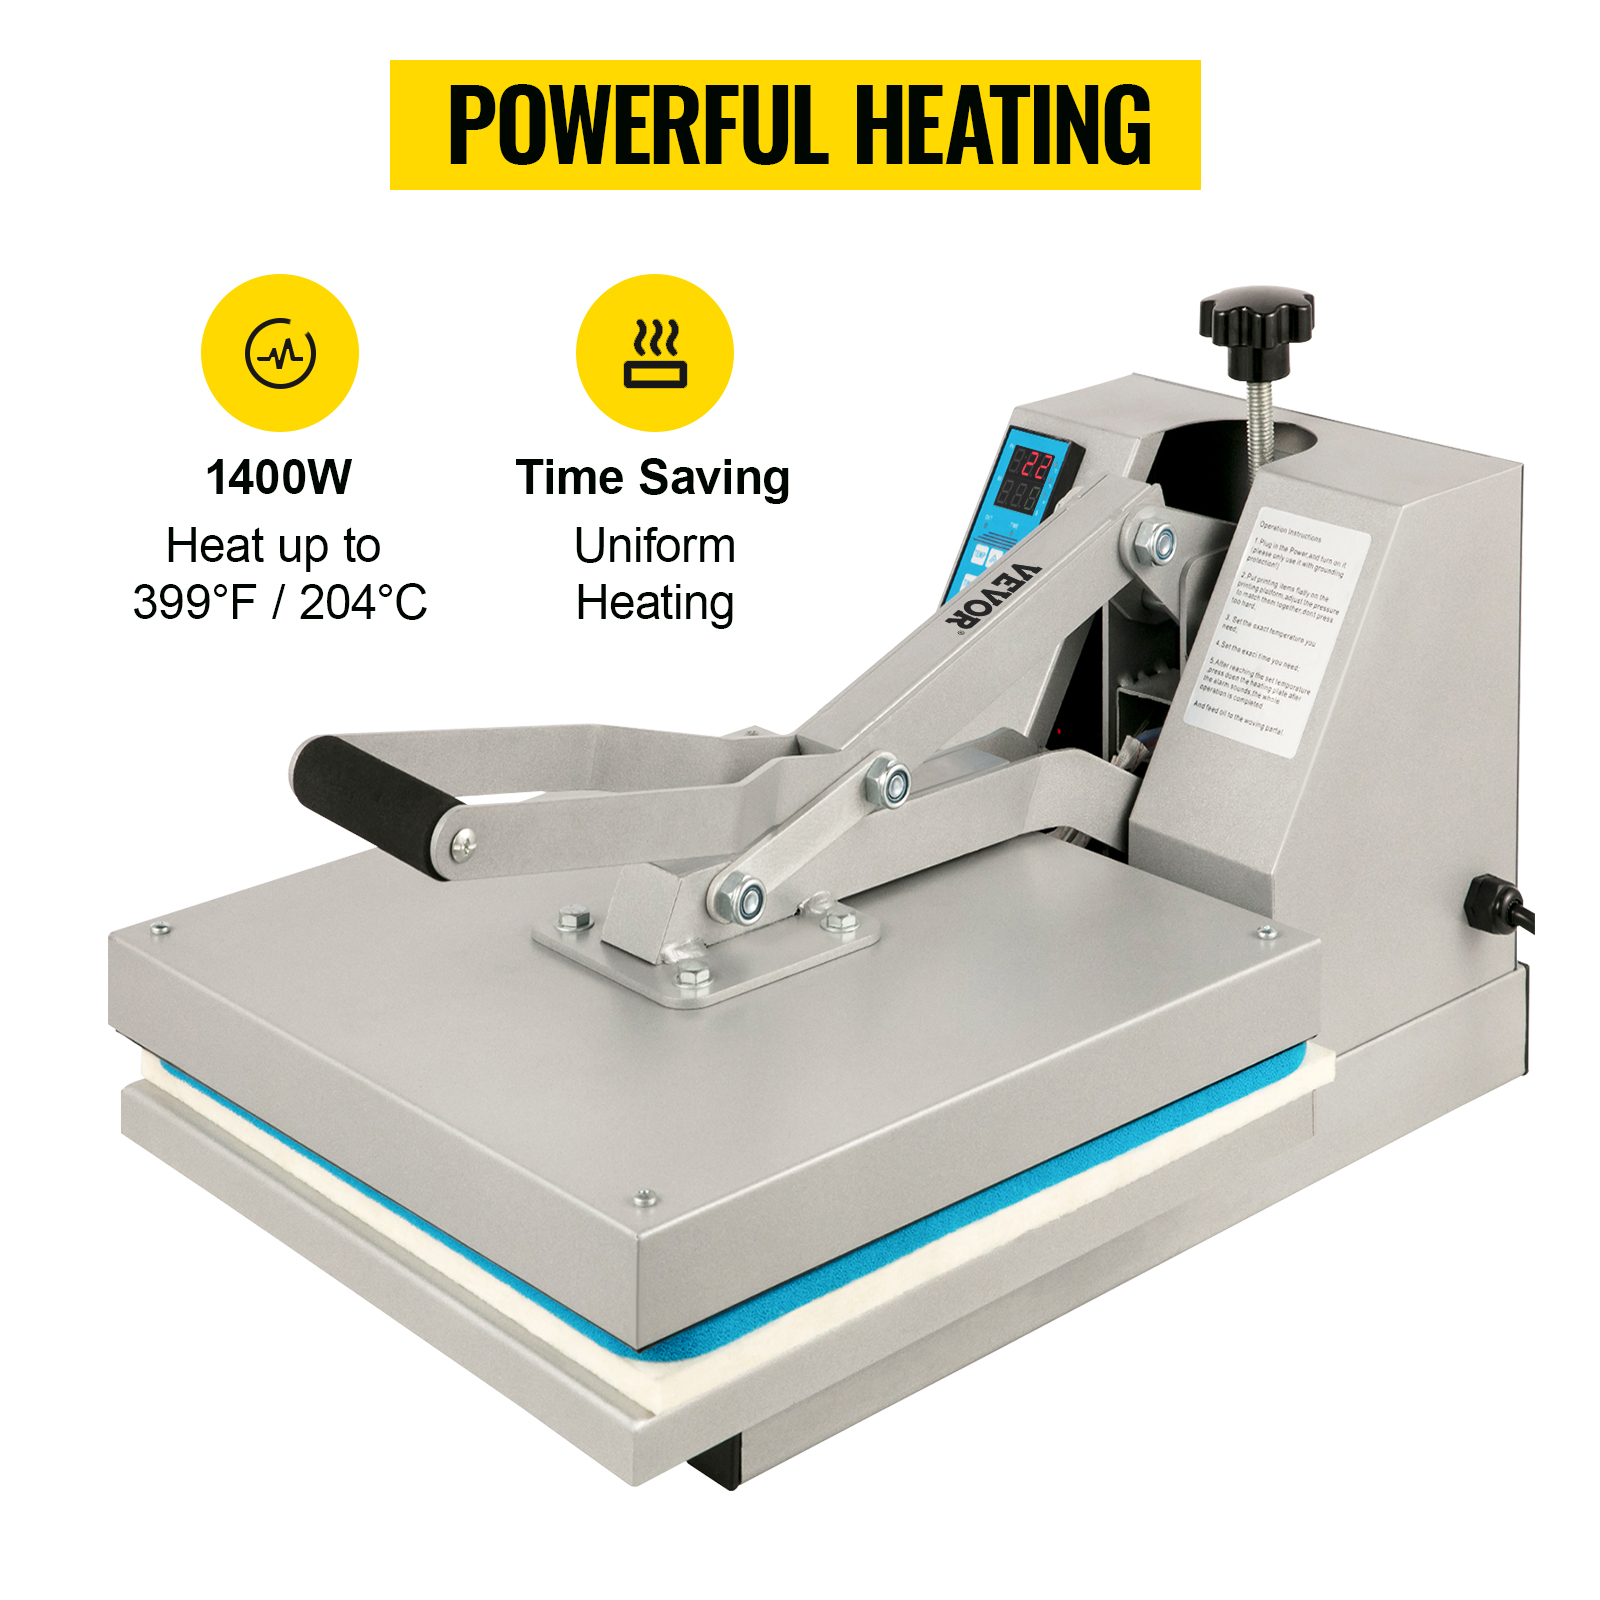 VEVOR Heat Press 15x15 Inch 8 in 1 Heat Press Machine